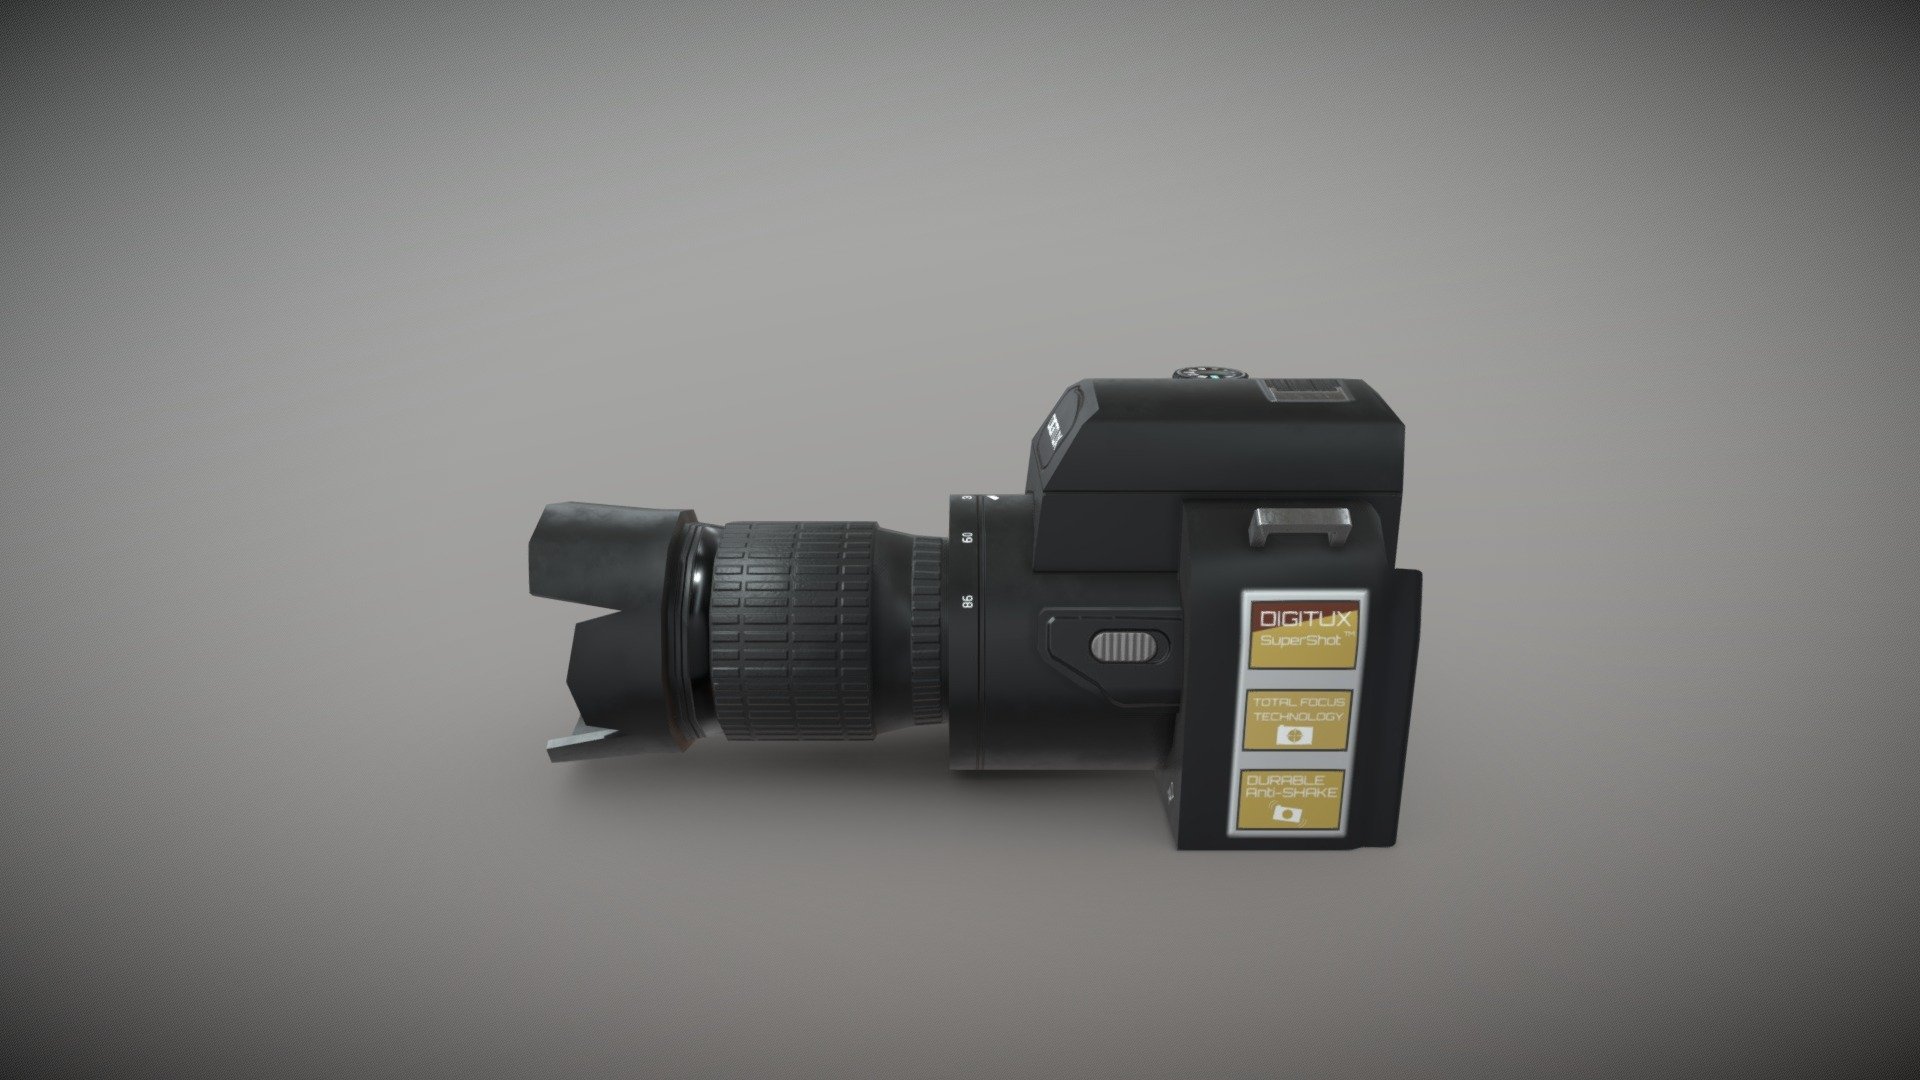 Digitux DSLR Camera